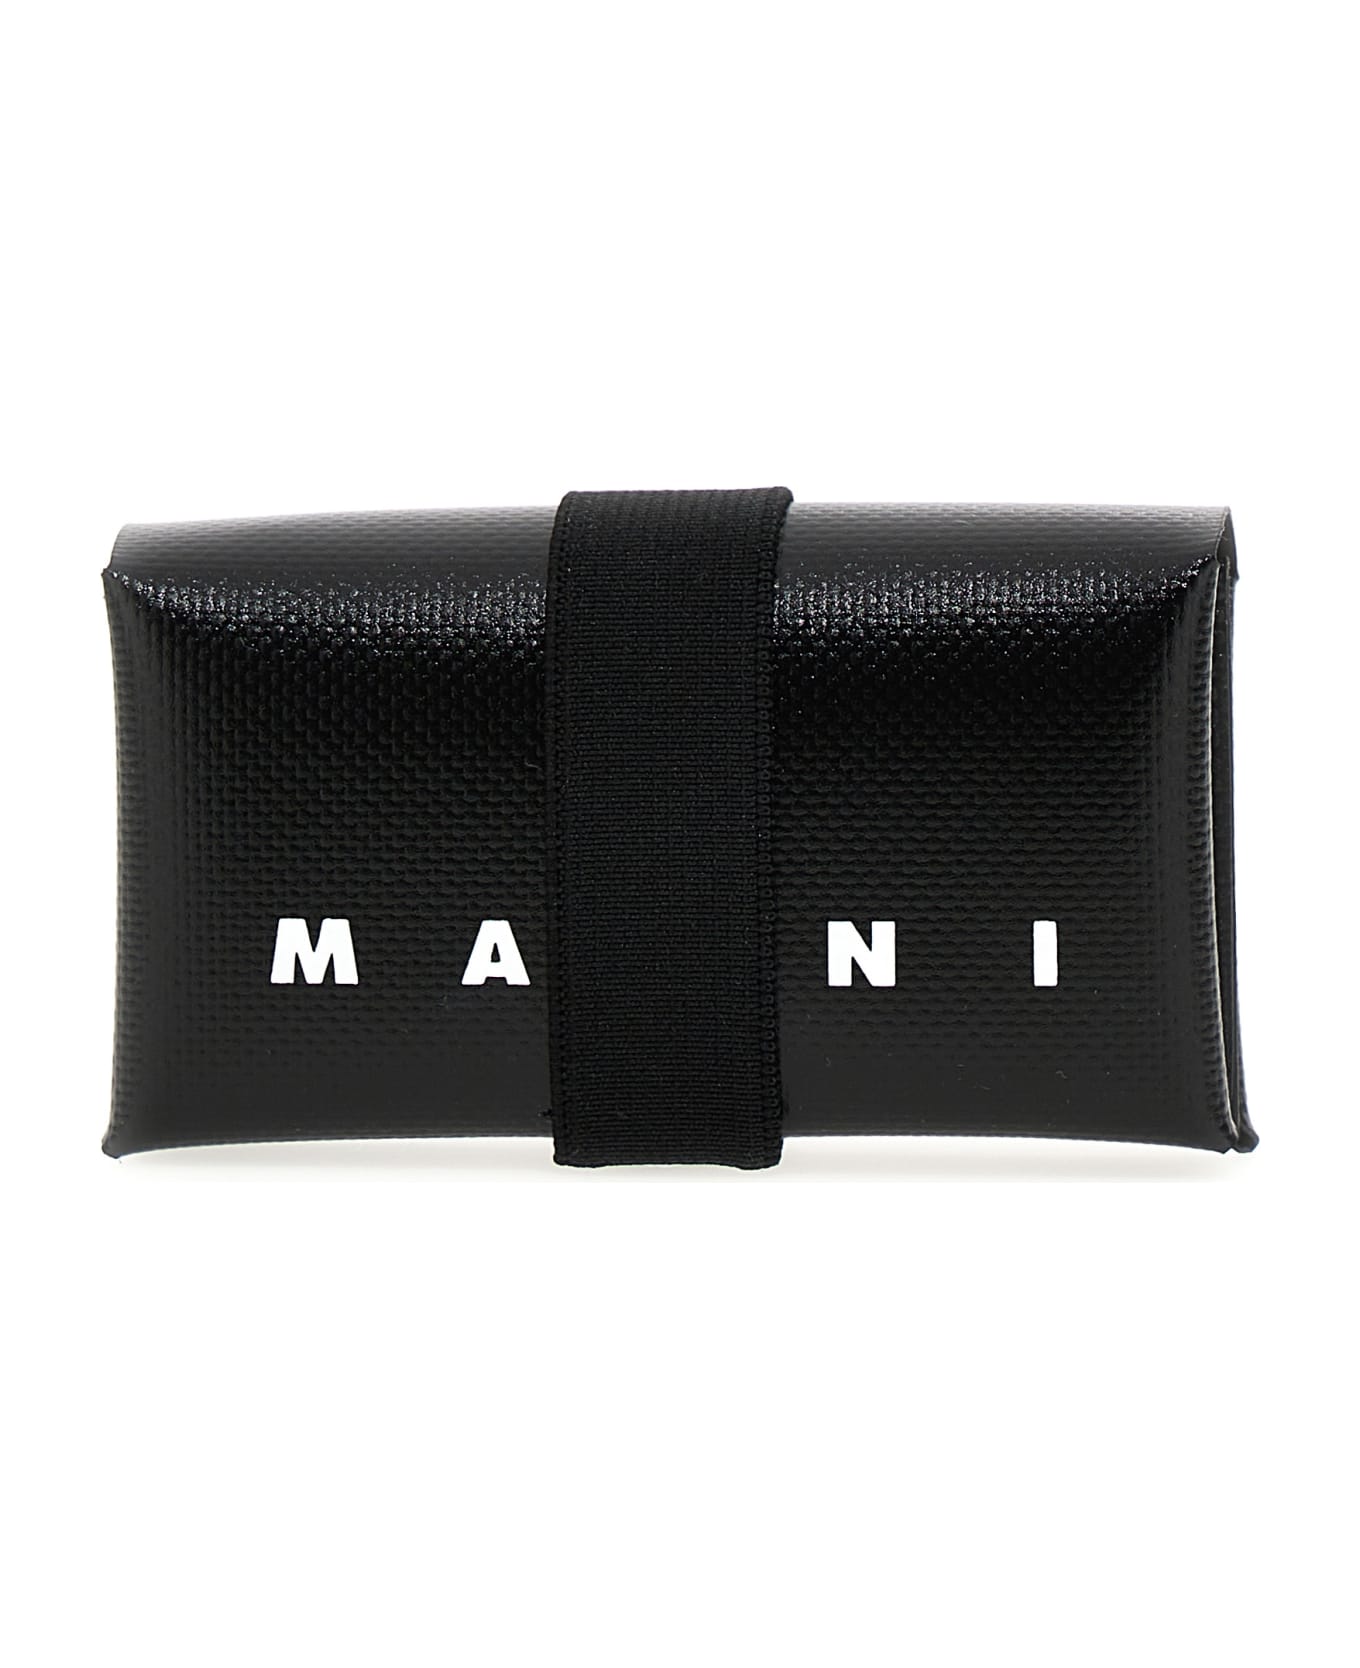 Marni Logo Wallet - Black   財布